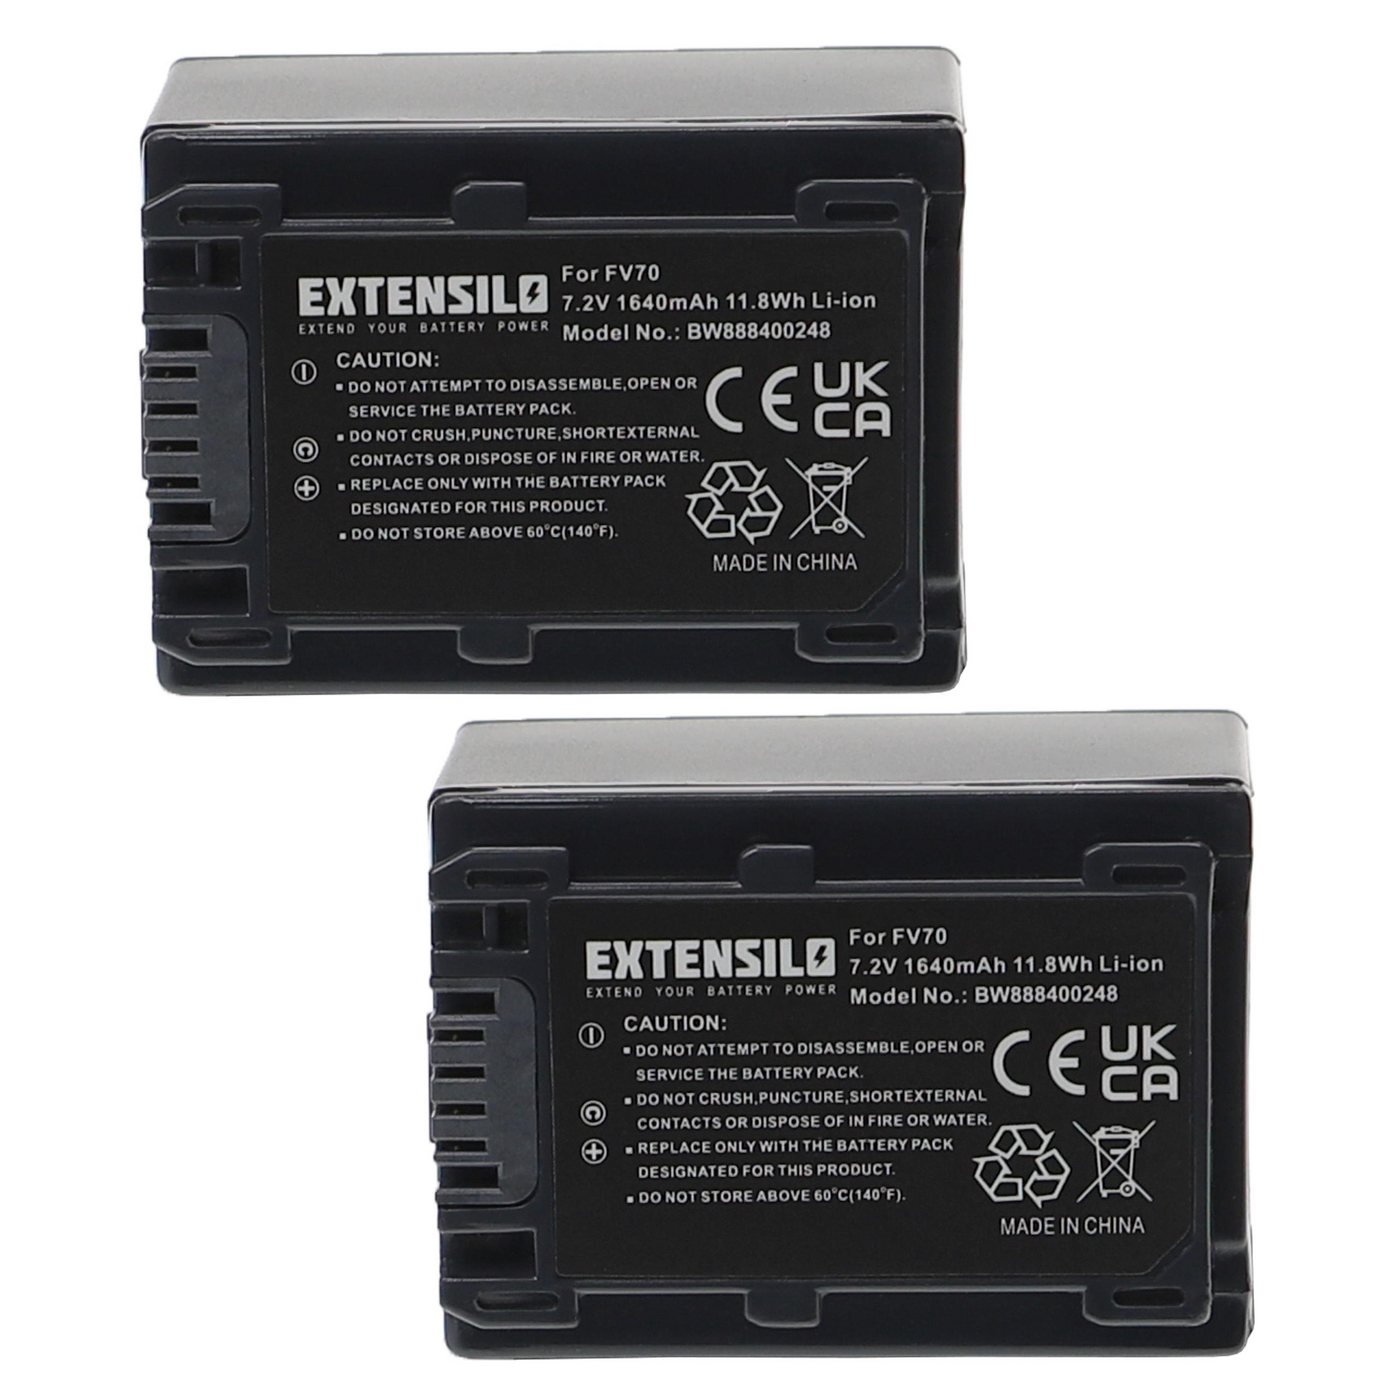 Extensilo passend für Sony HDR-CX105VE, HDR-CX106VE, HDR-CX110, HDR-CX110/L, HDR-CX110/R, HDR-CX106E Kamera / Foto DSLR / Camcorder Analog / Camcorder Digital (1640mAh, 7,2V, Li-Ion) Kamera-Akku 1640 mAh von Extensilo